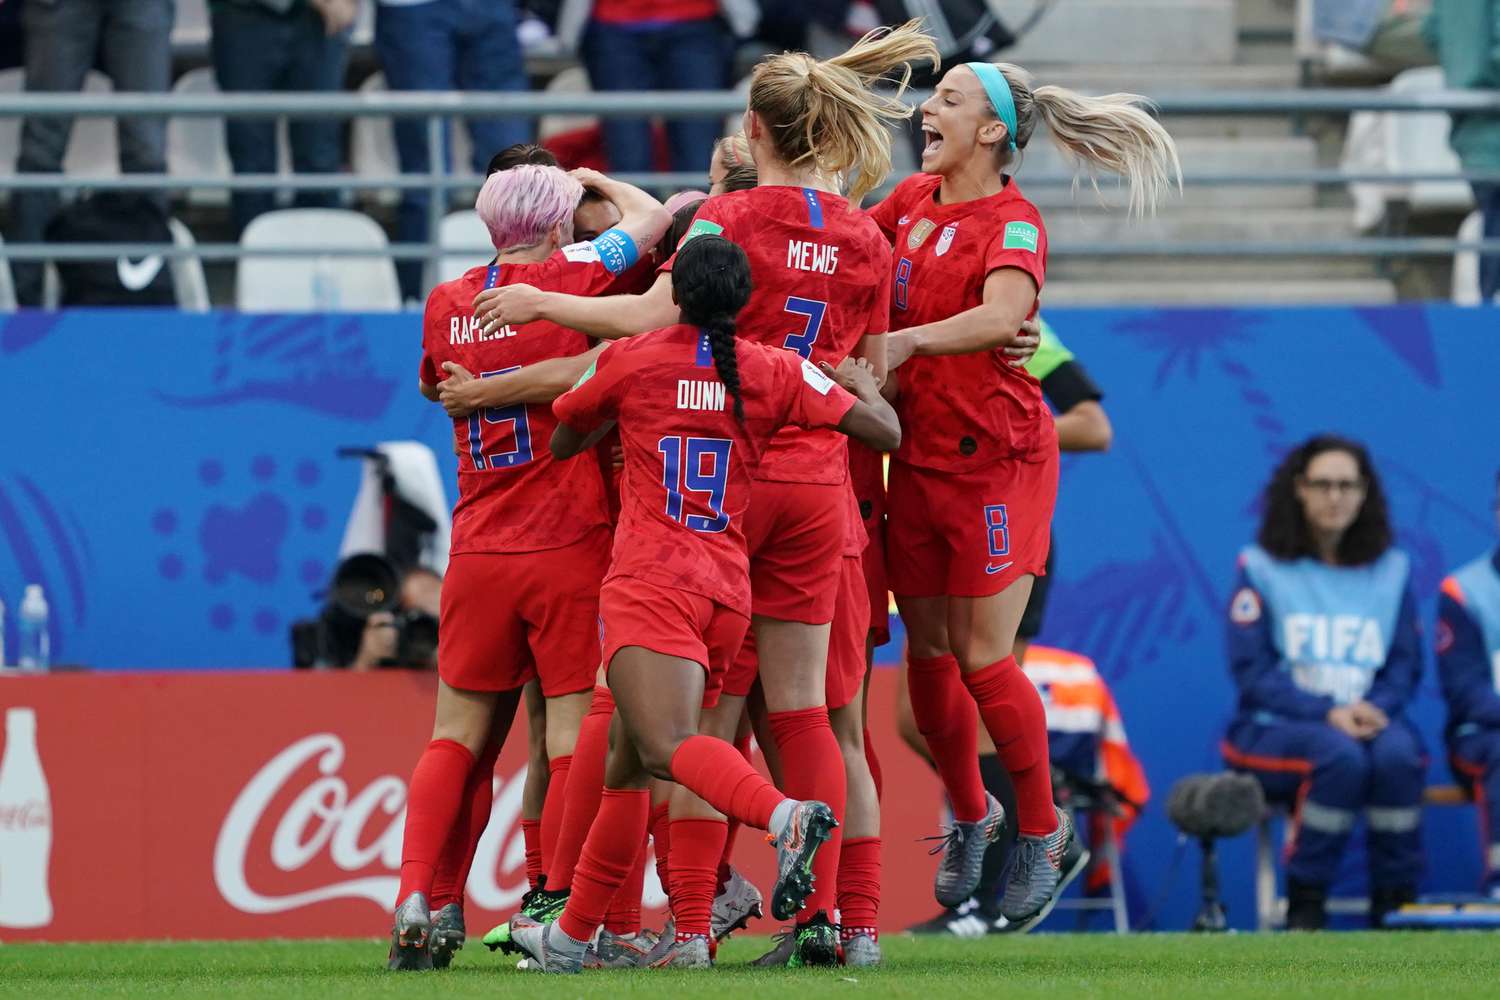 Image result for us women soccer team celebration 2019